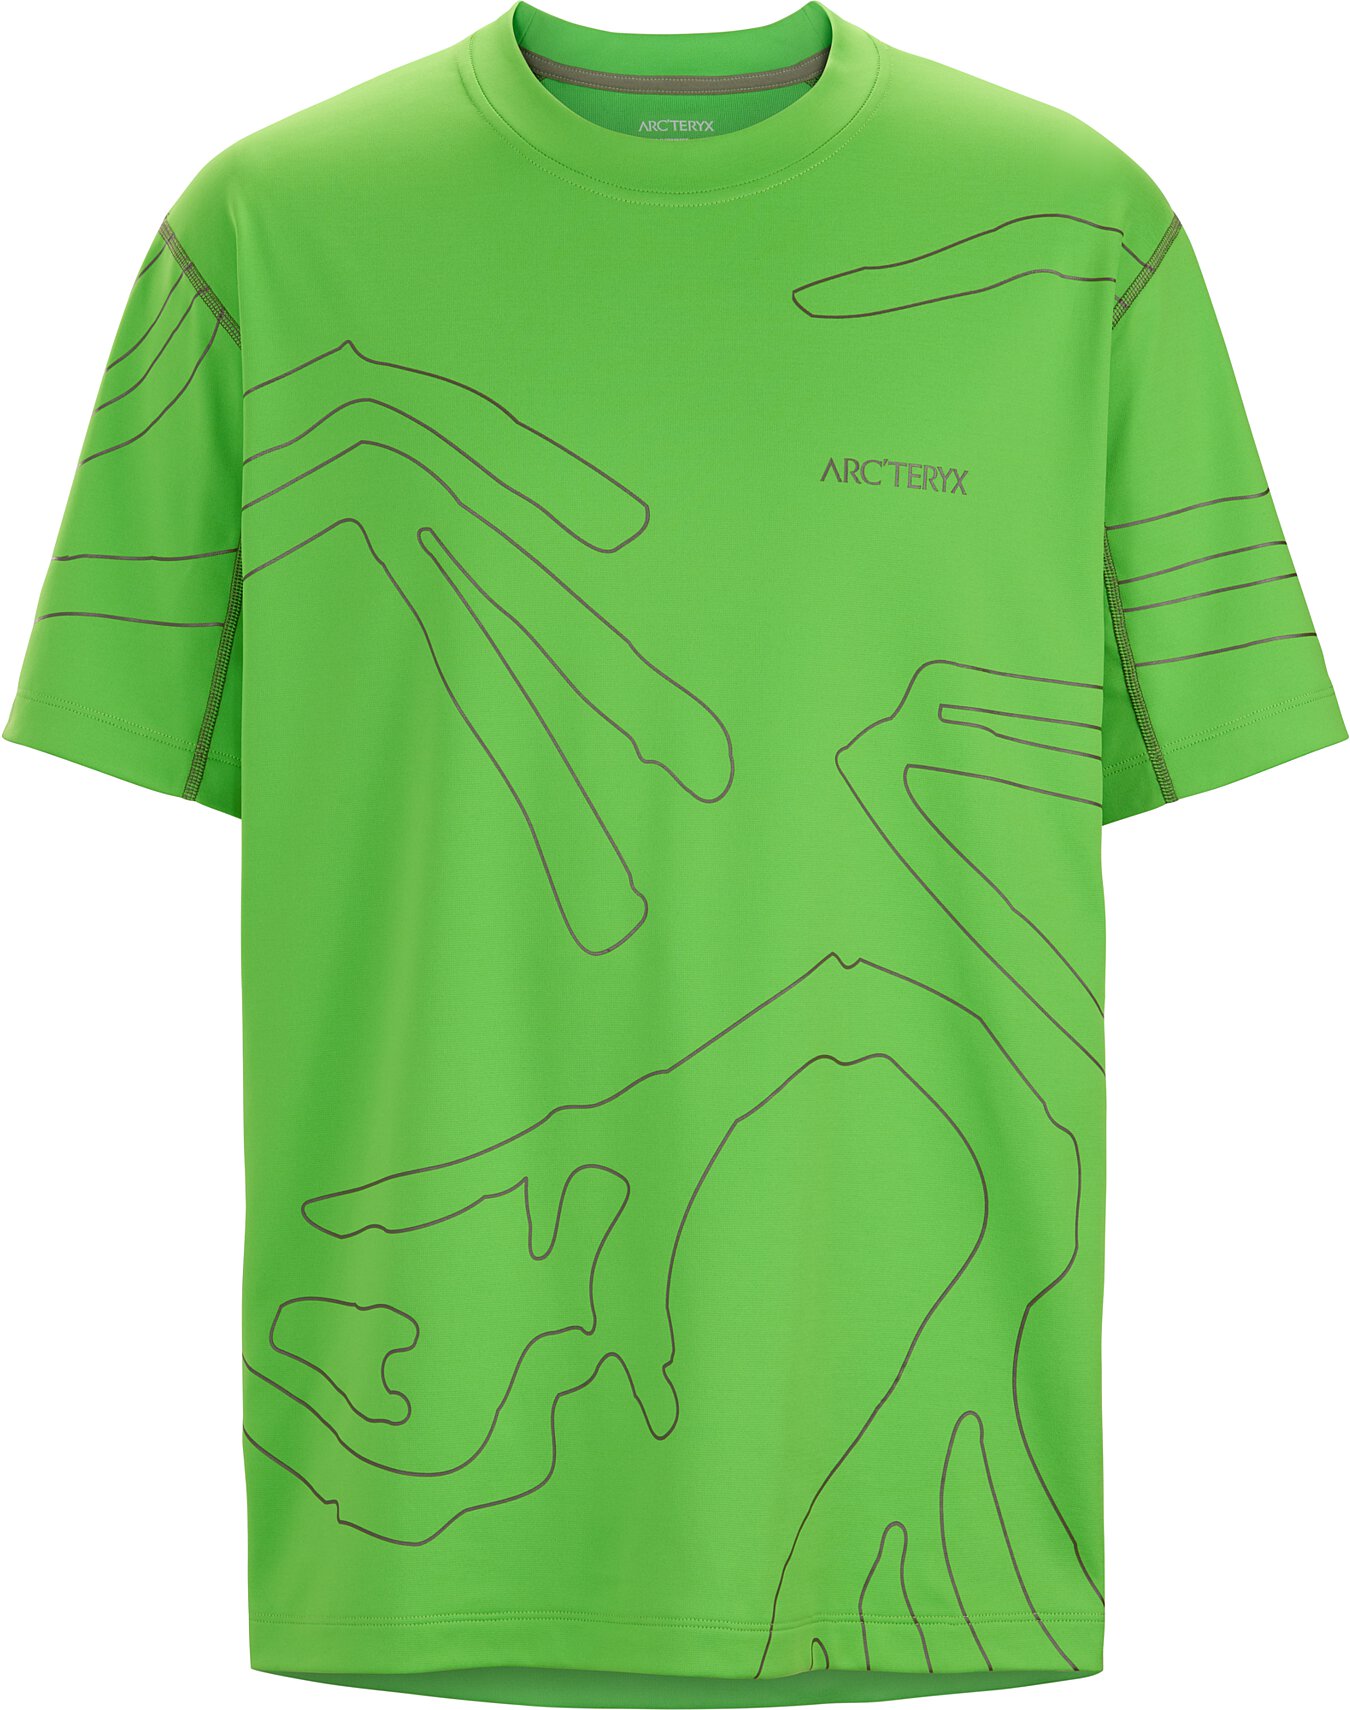 Copal Grotto Line T-Shirt